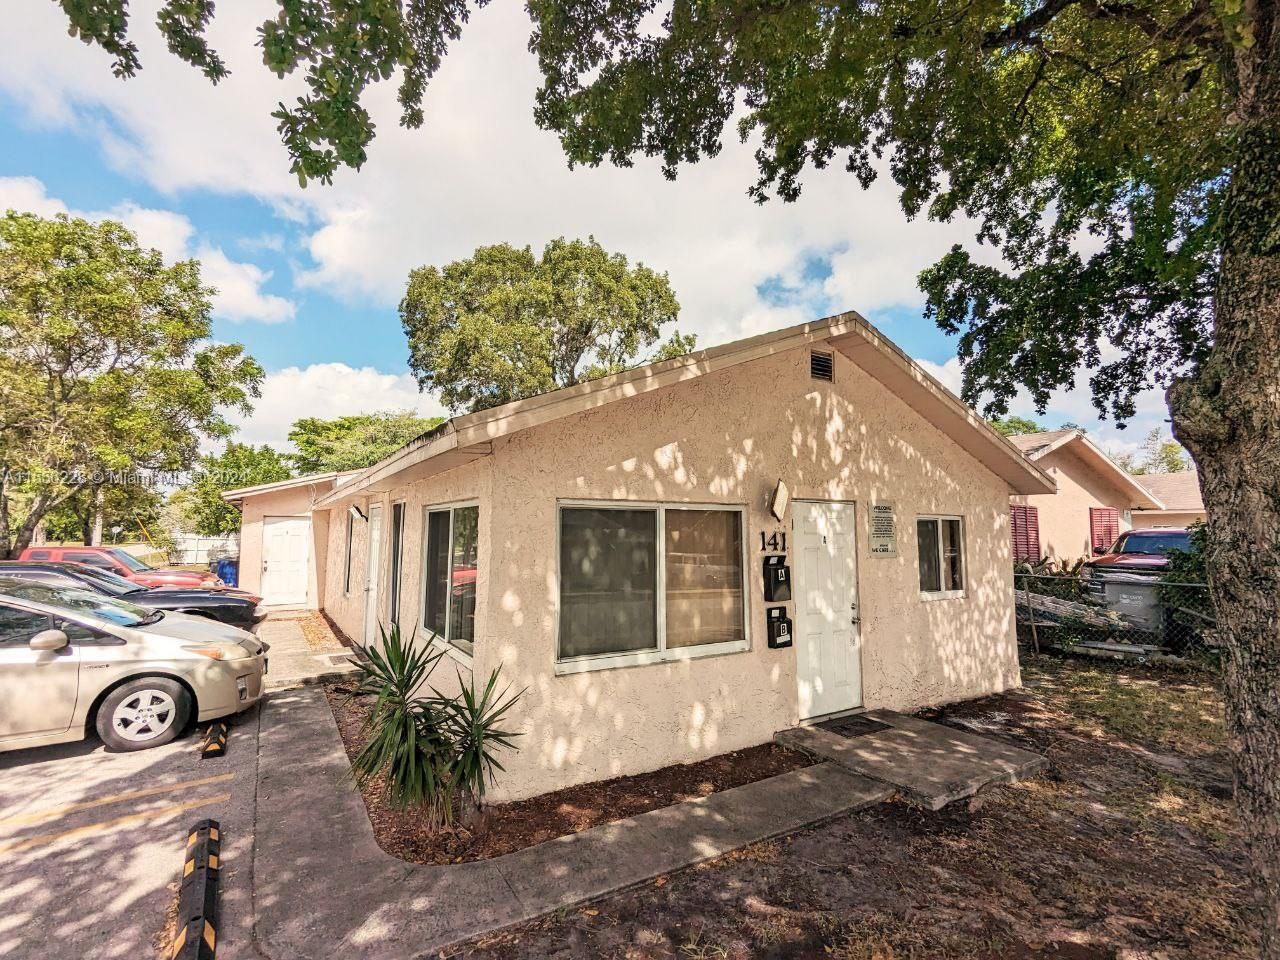 Rental Property at 141 Nw 10th St, Pompano Beach, Broward County, Florida -  - $660,000 MO.